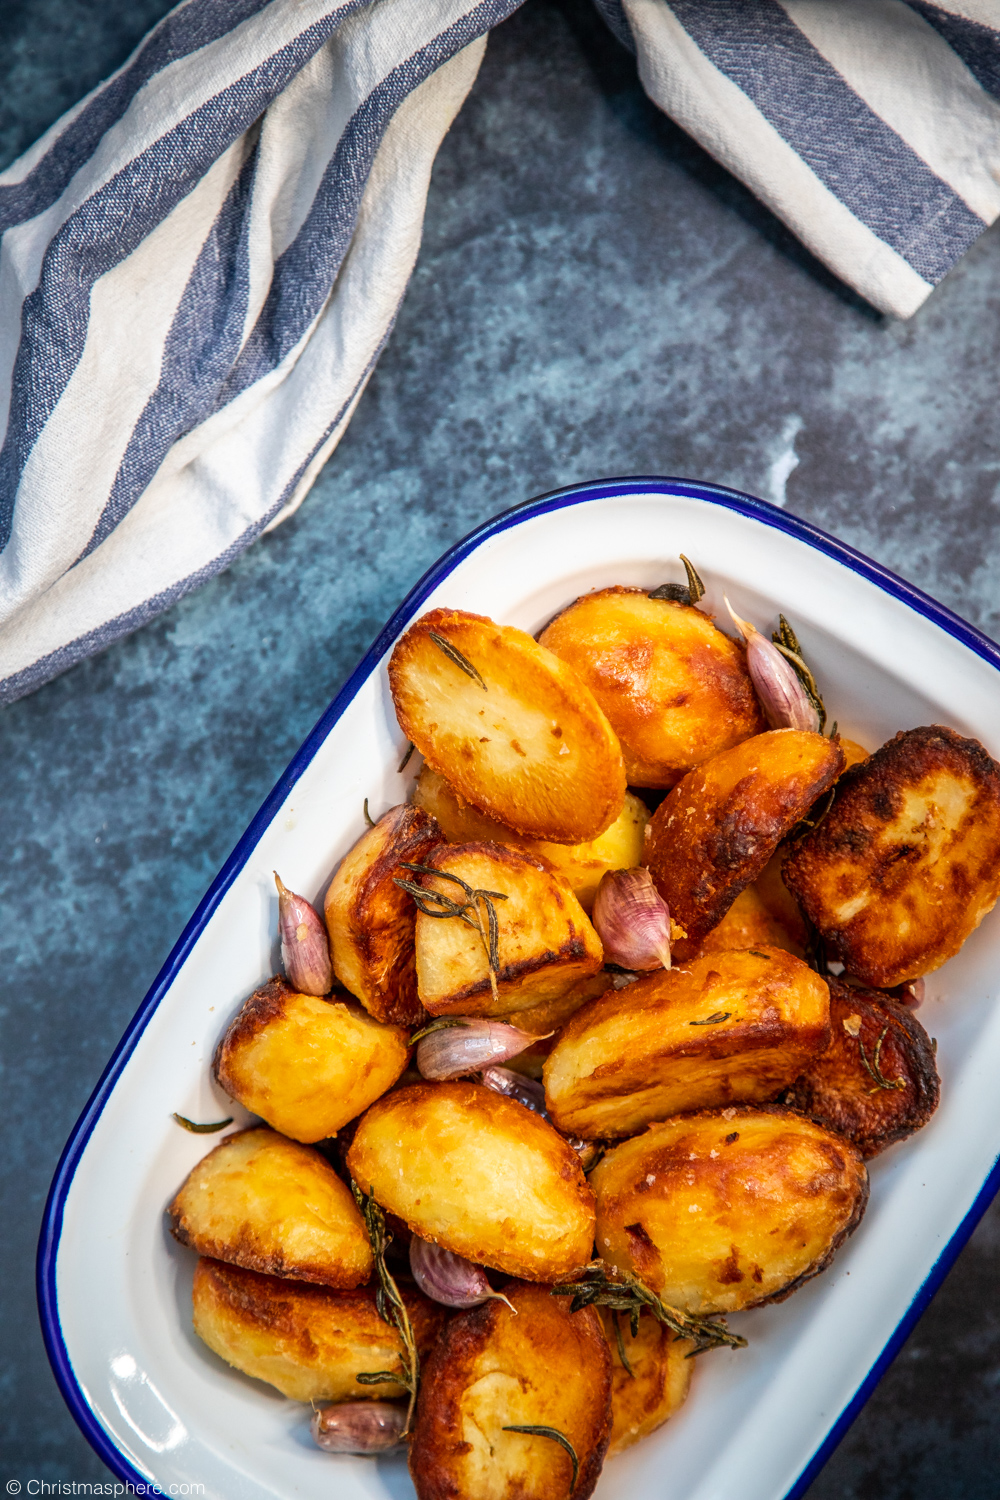 Roast potatoes with rosemary and garlic